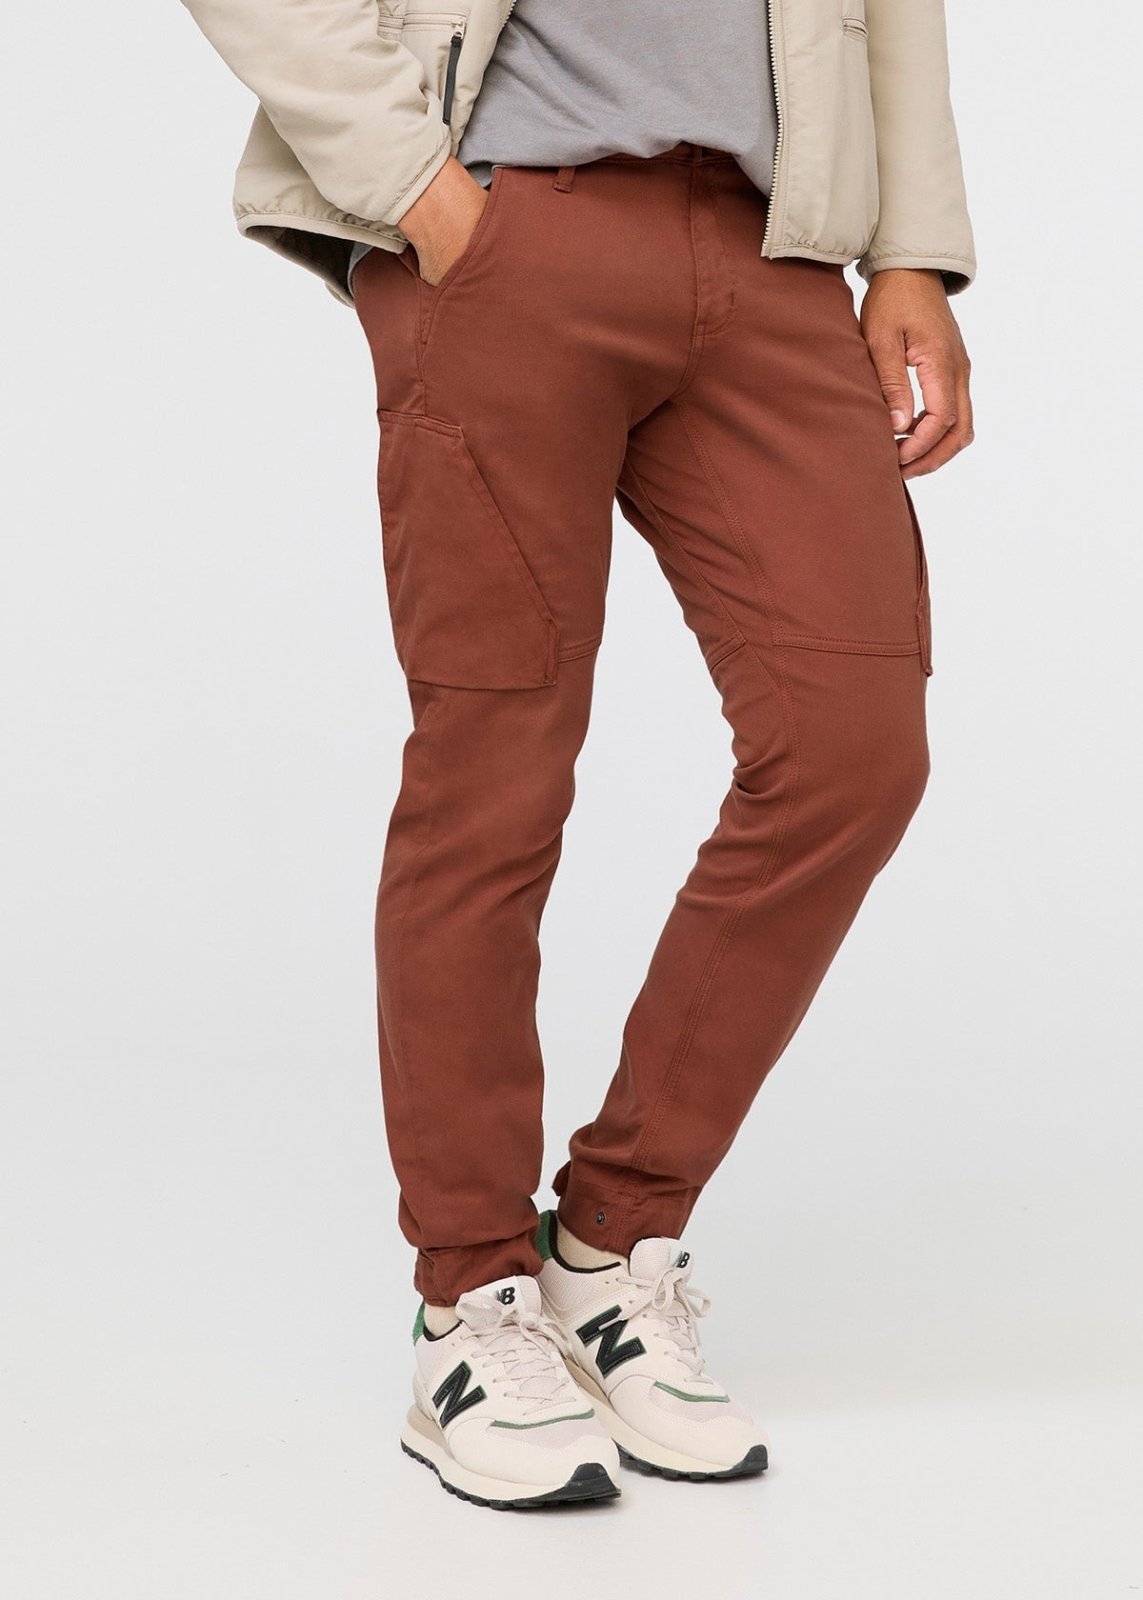 mens red-brown athletic waterproof pant front